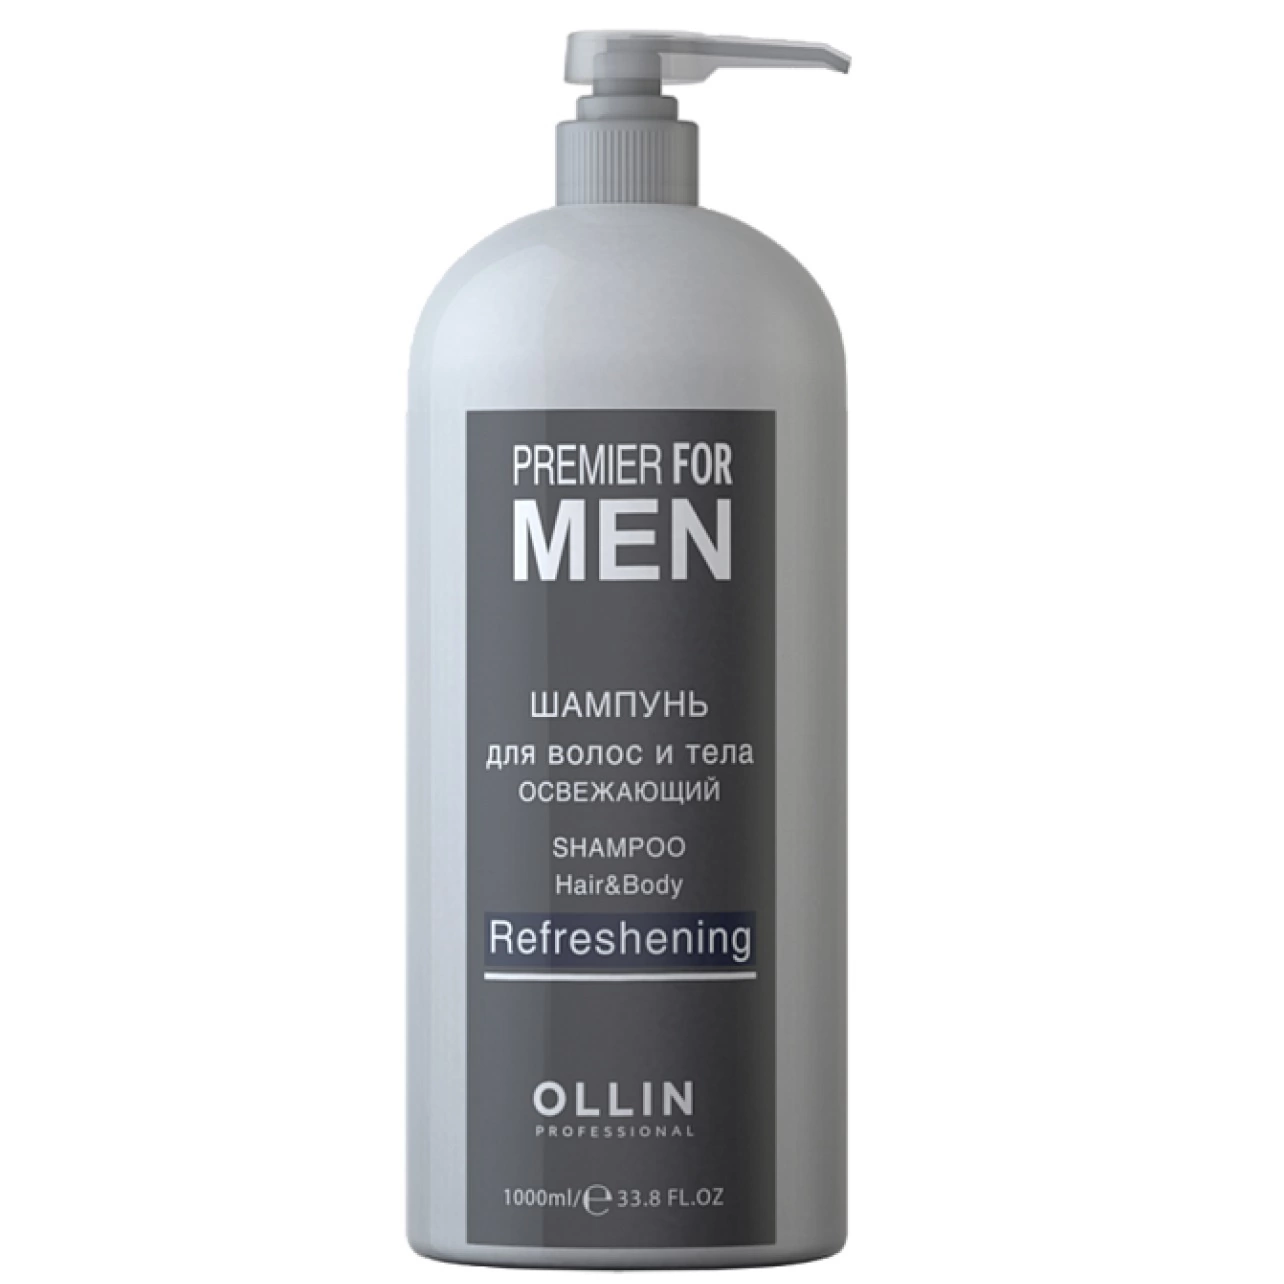 Ollin Premier for Men Hair Shampoo Refresheing - Шампунь для волос и тела Освежающий 1000 мл